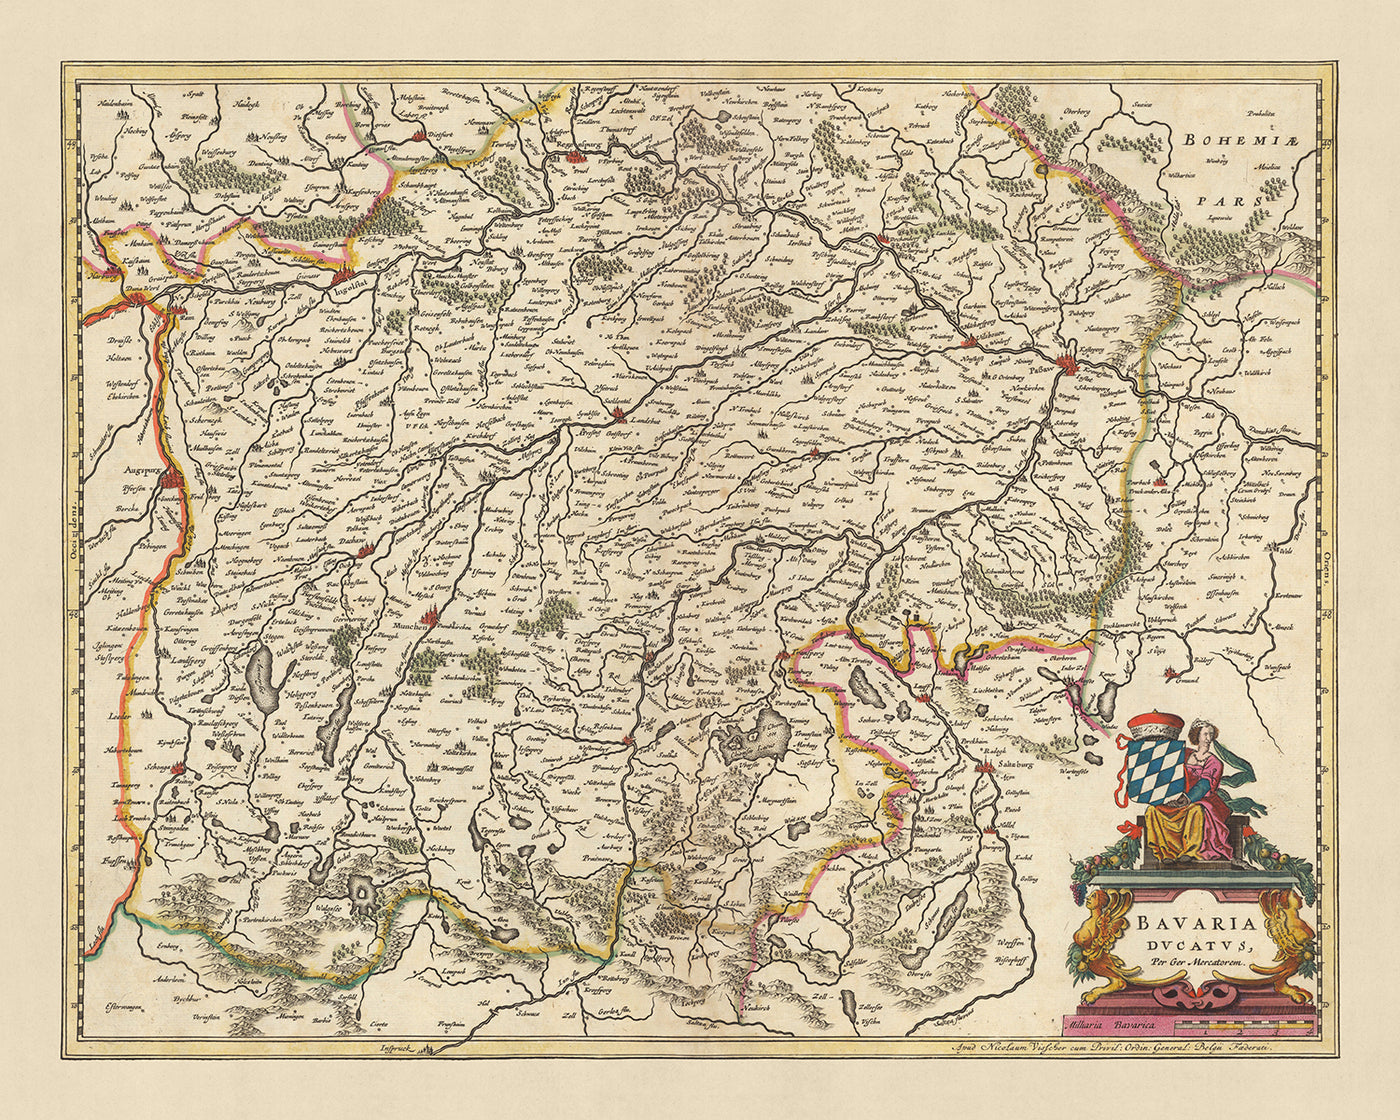 Ancienne carte du duché de Bavière par Visscher, 1690 : Ratisbonne, Ingolstadt, Munich, Augsbourg, Zugspitze